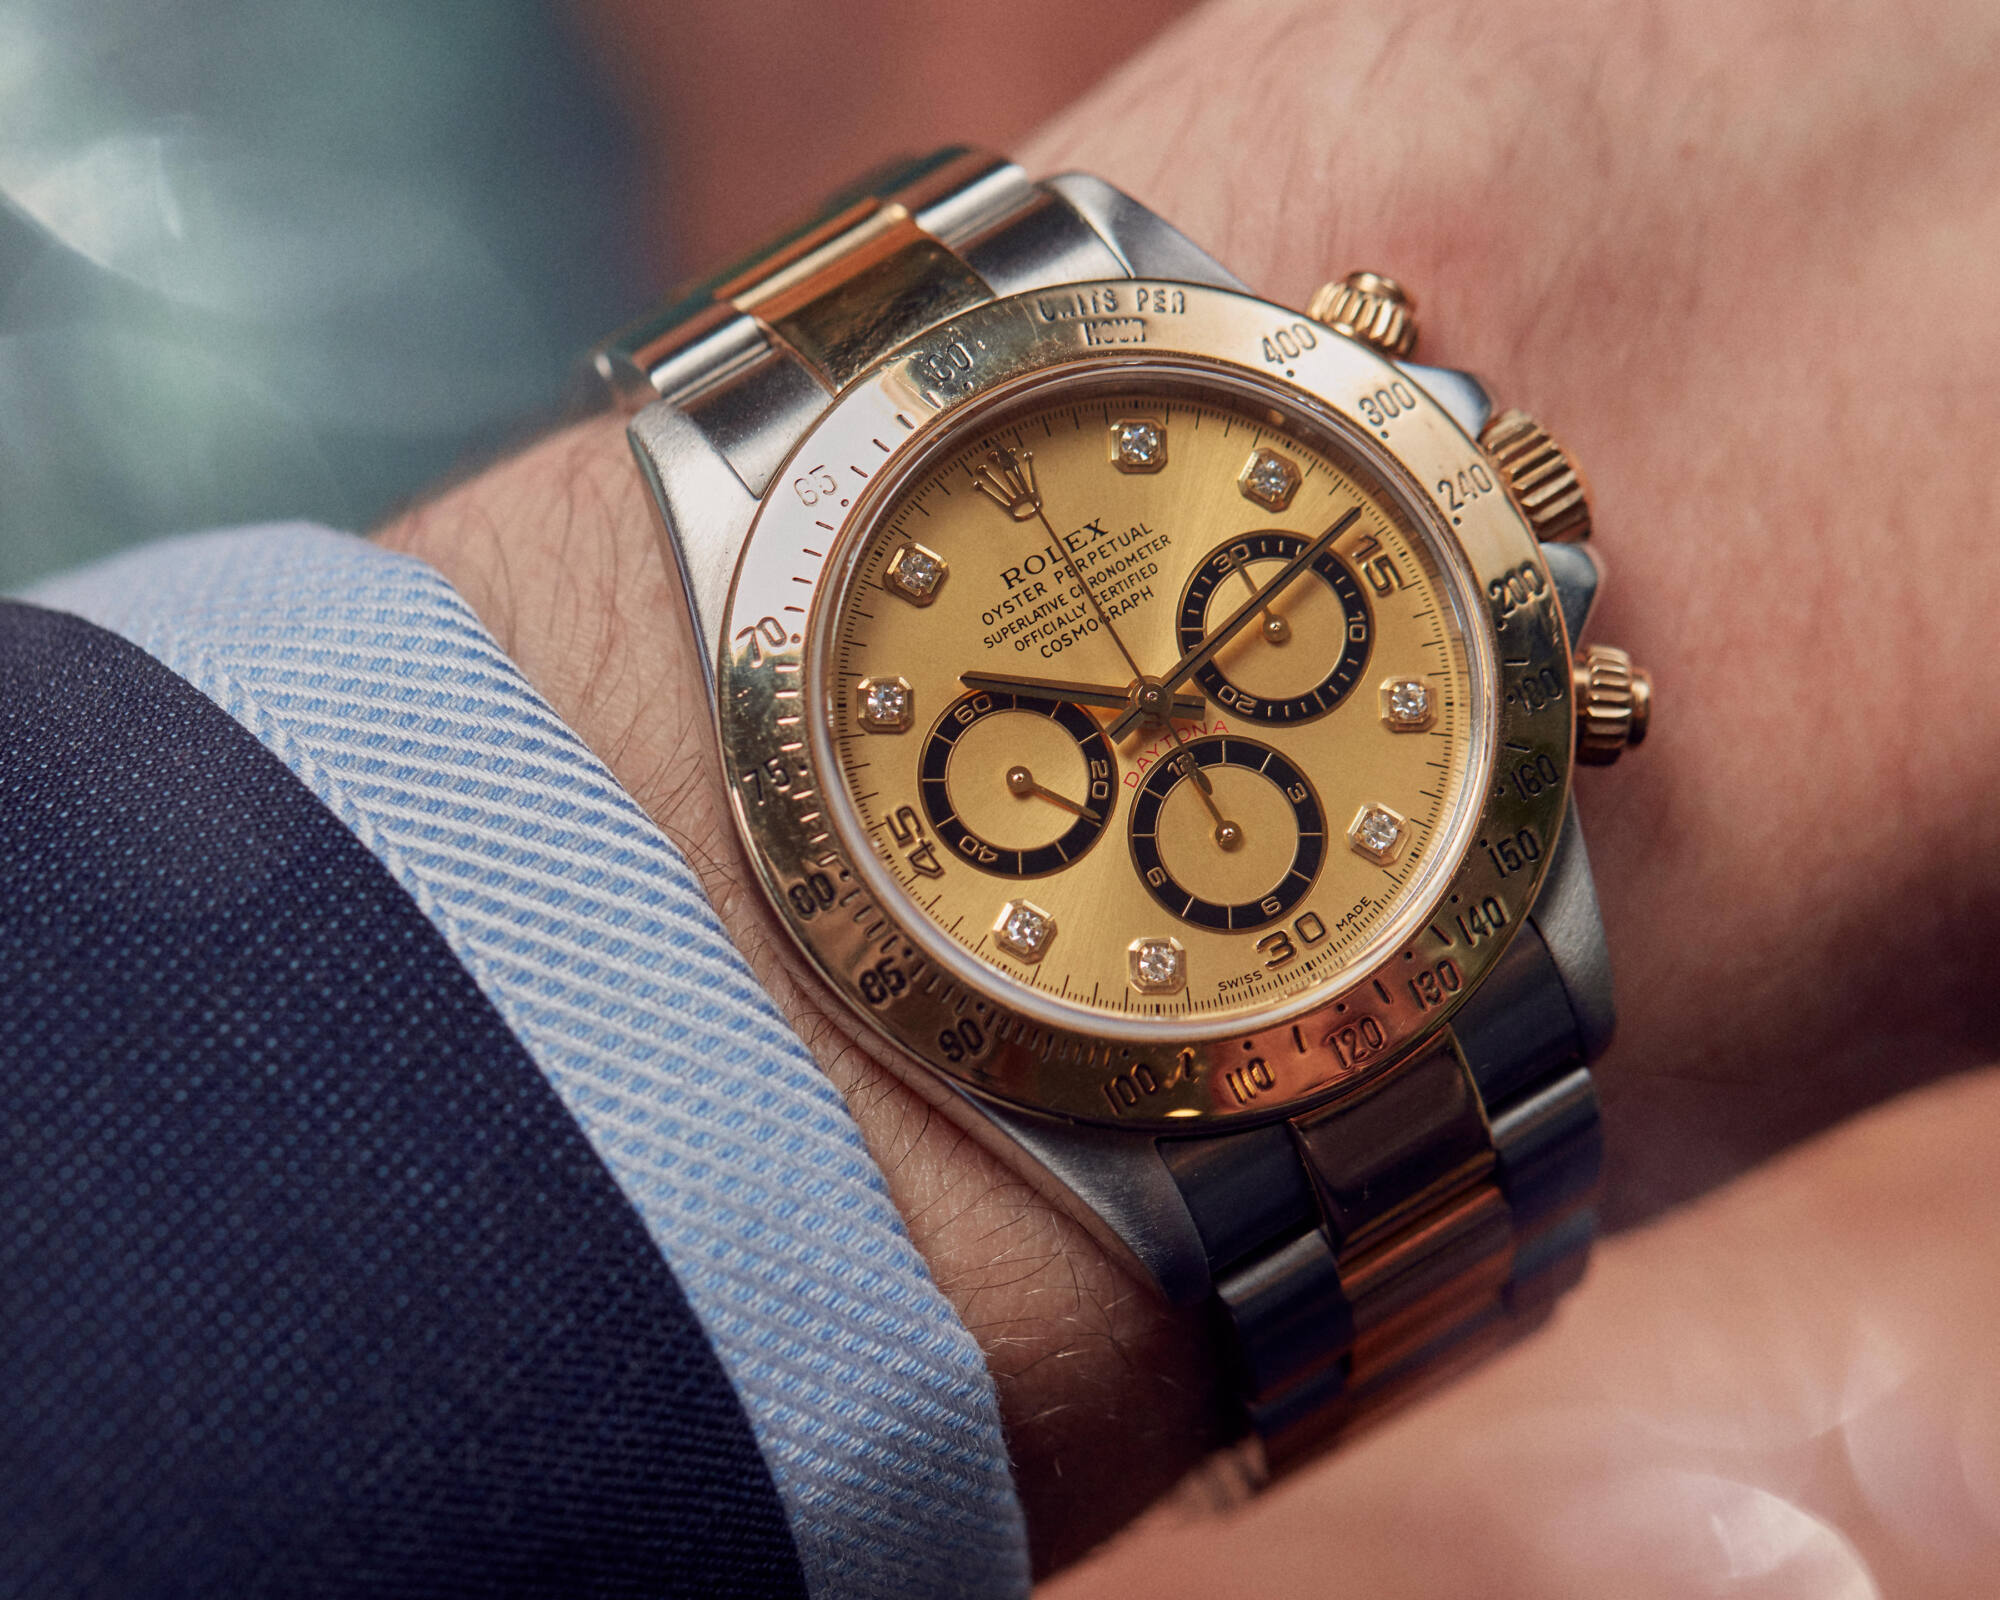 Watches & Wristwatches” Auction by Bonhams - MondaniWeb